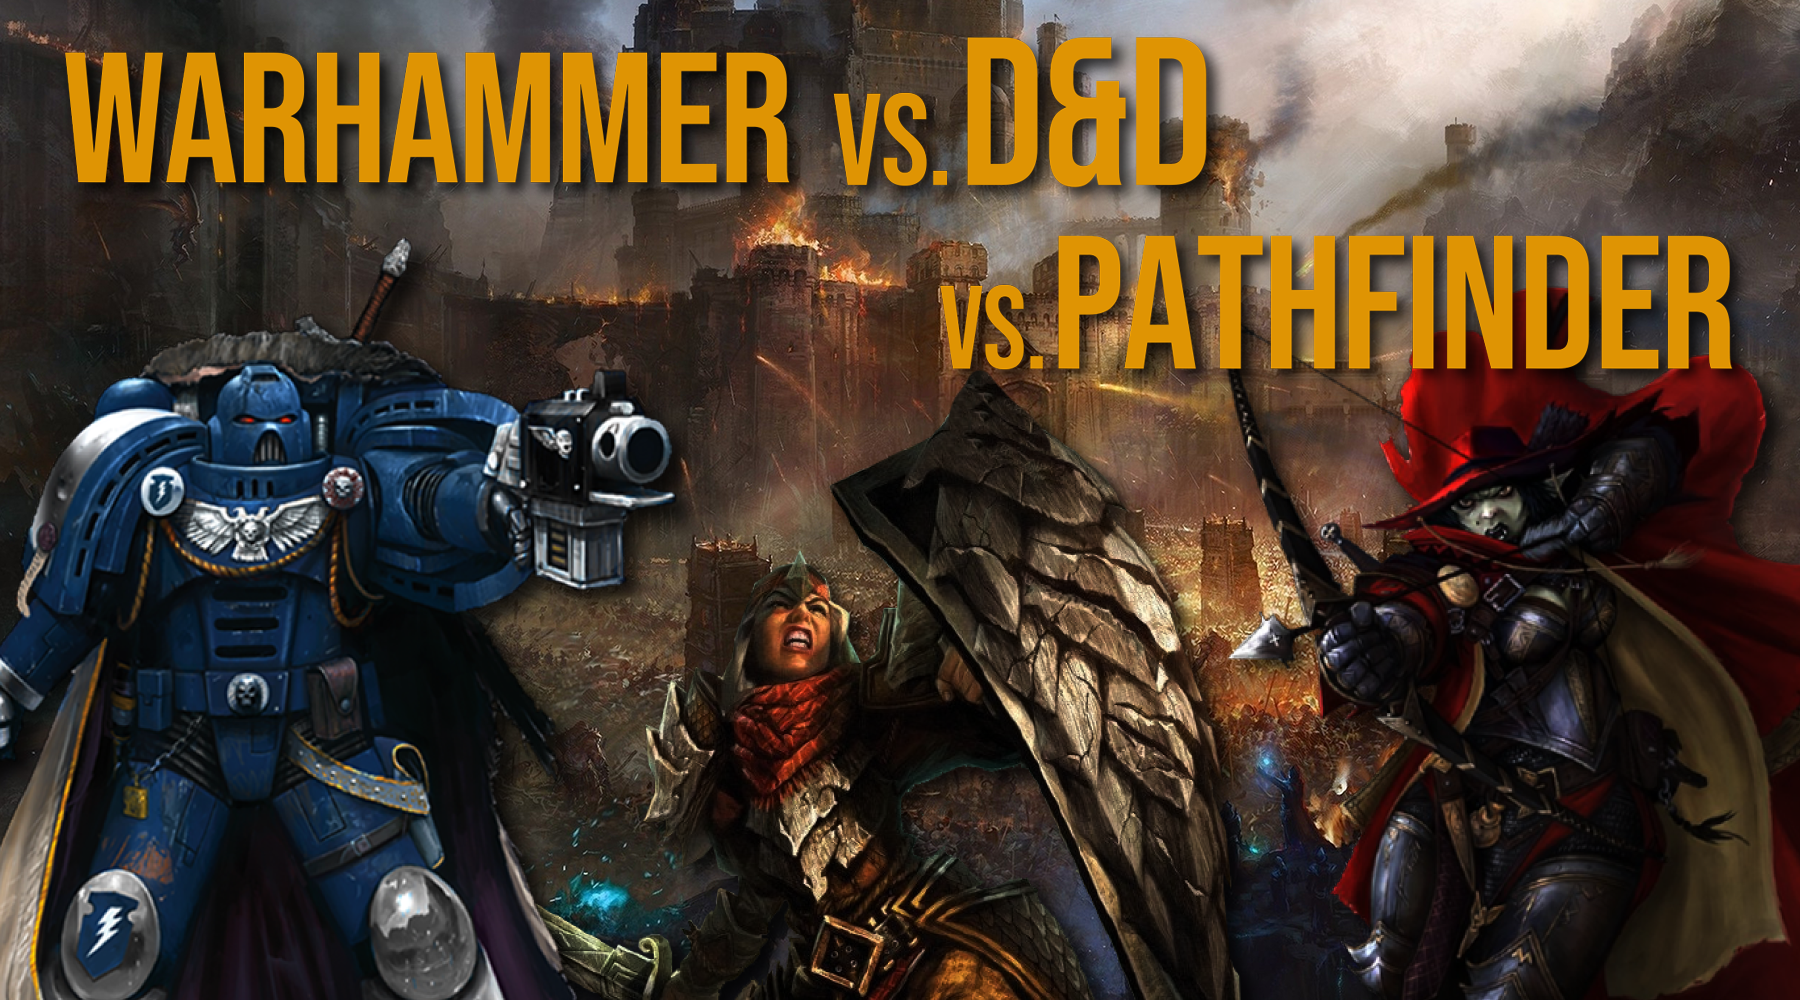 Is Warhammer older than D&D?